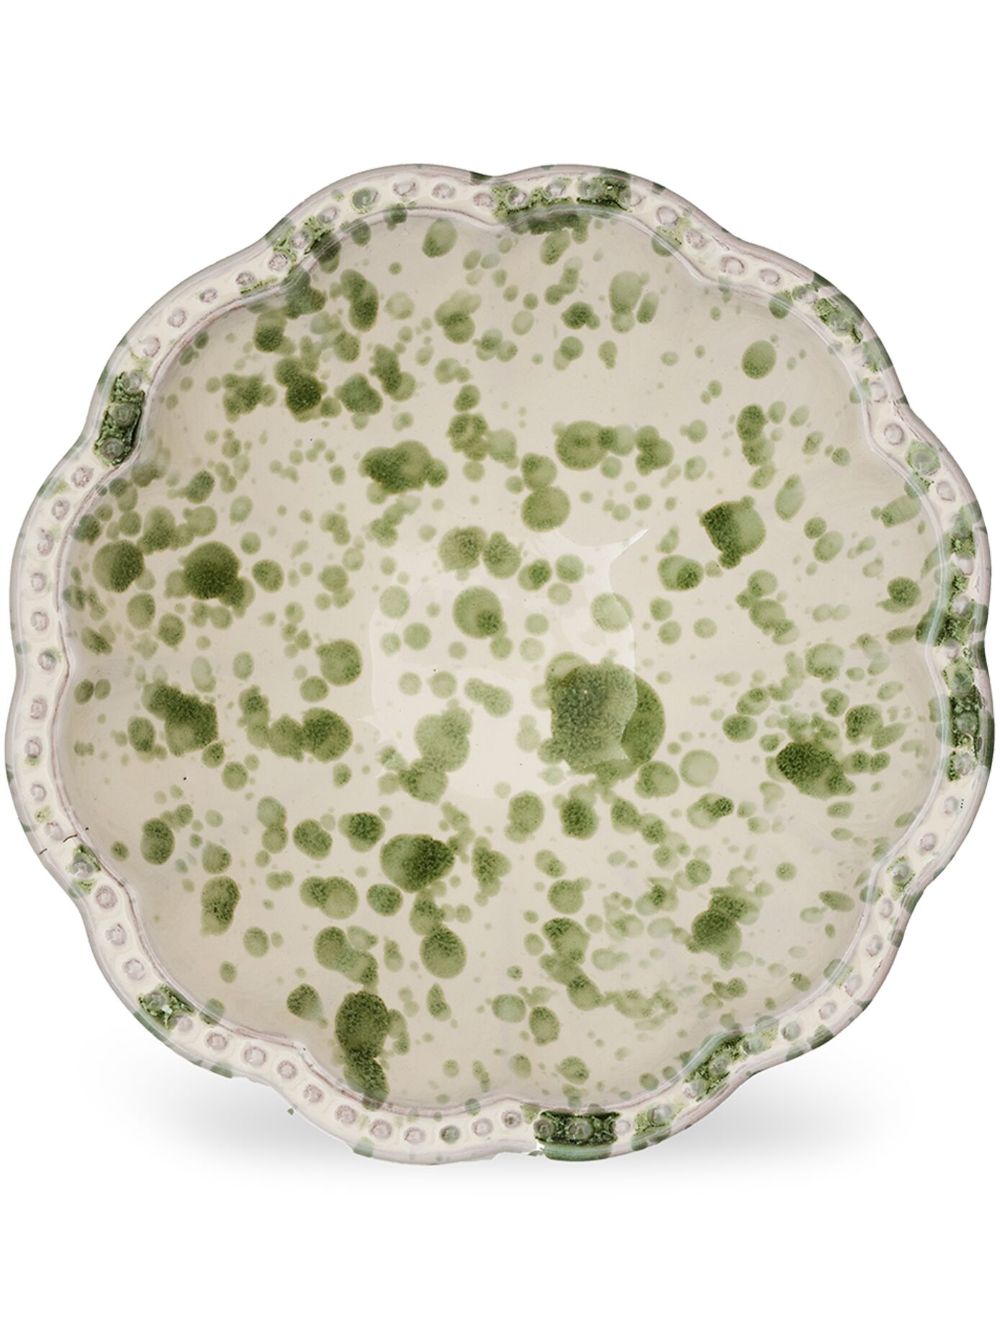 Cabana Speckled Dessert Plate (21cm) In Green